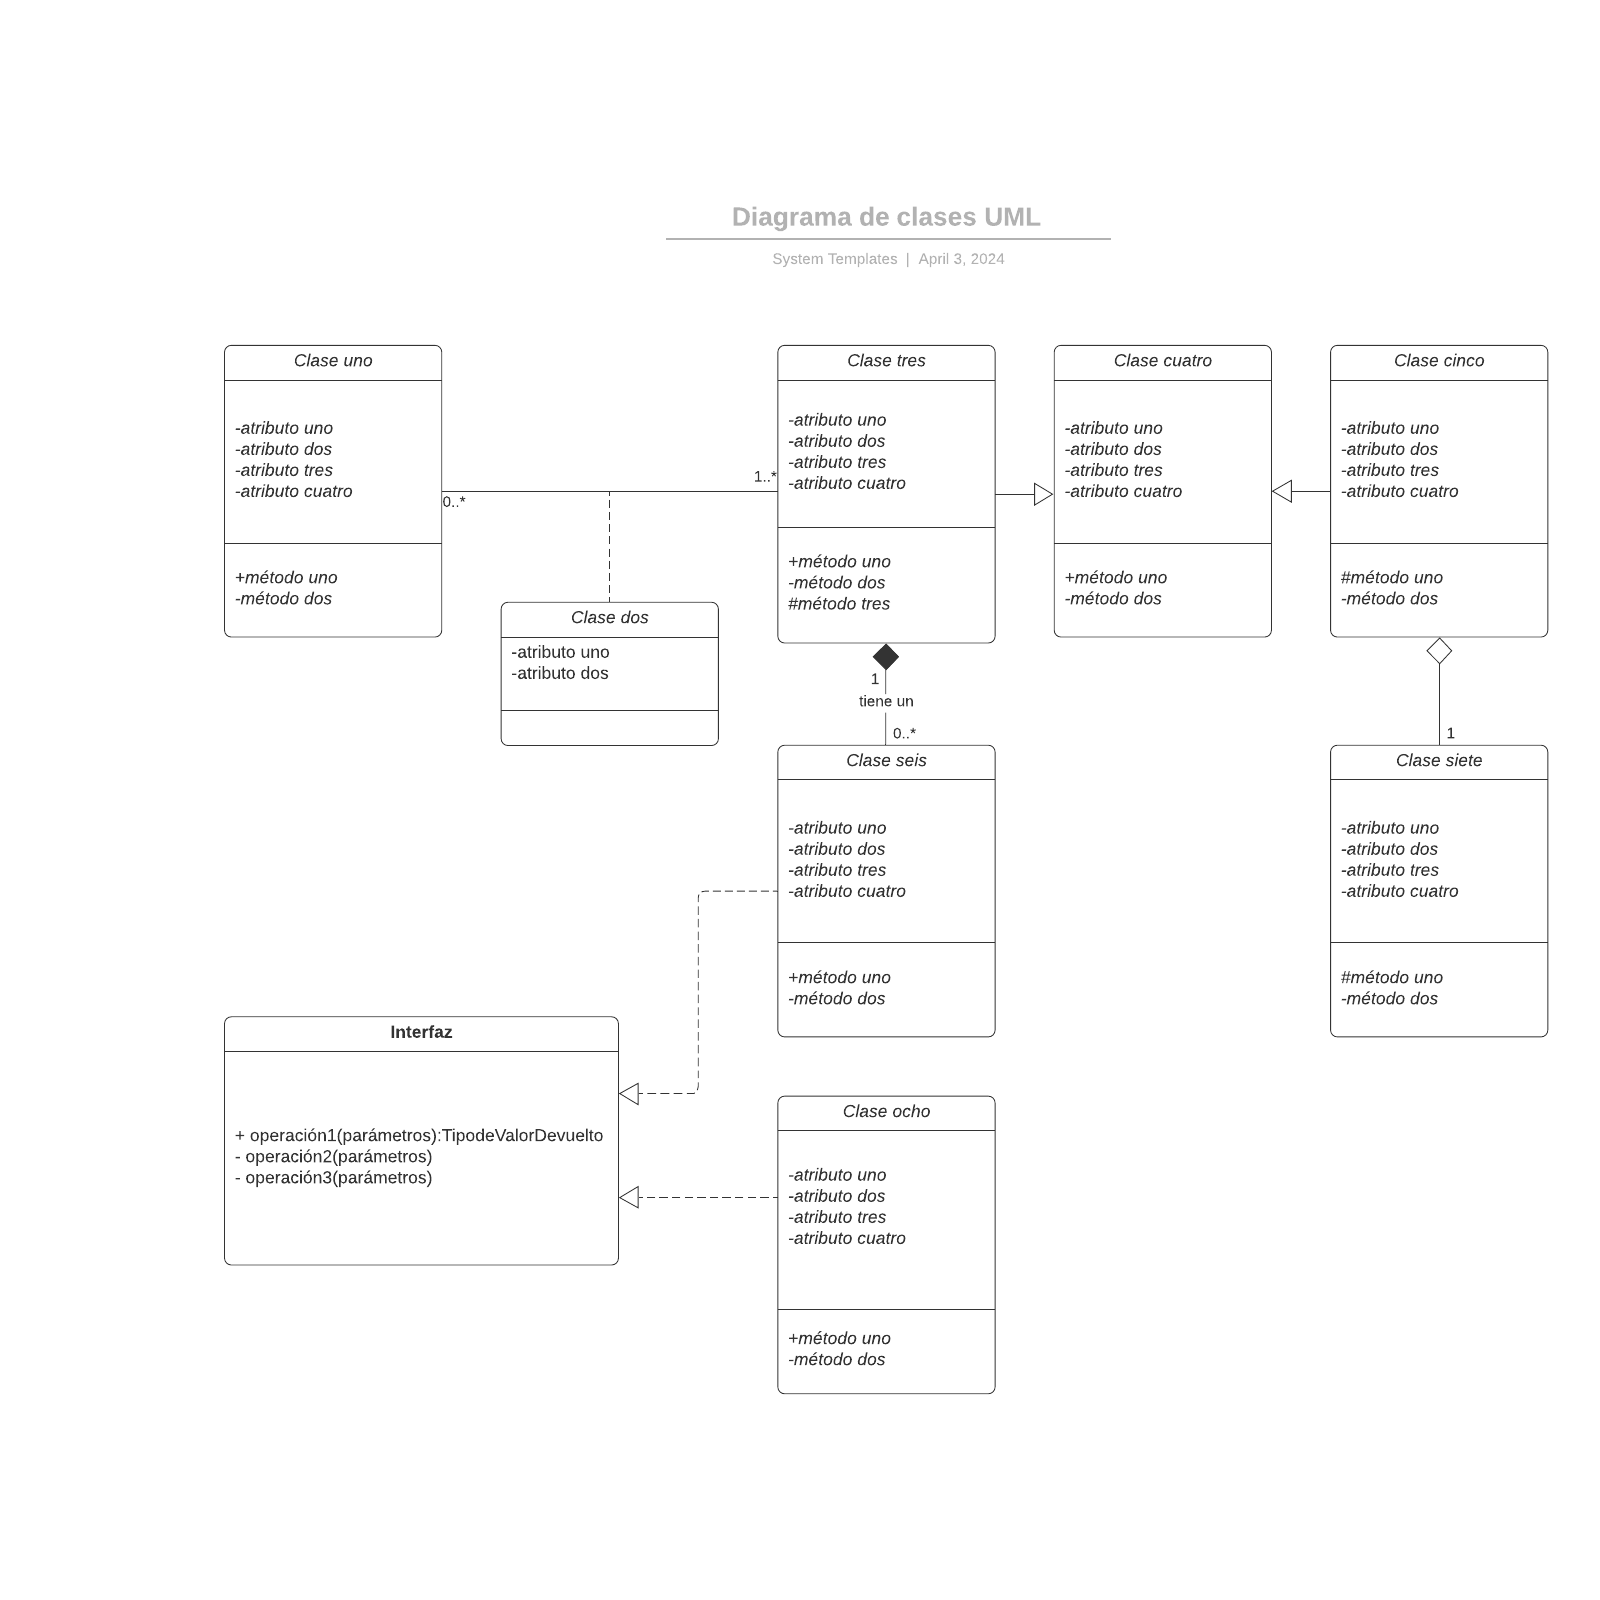 Diagrama de clases UML example